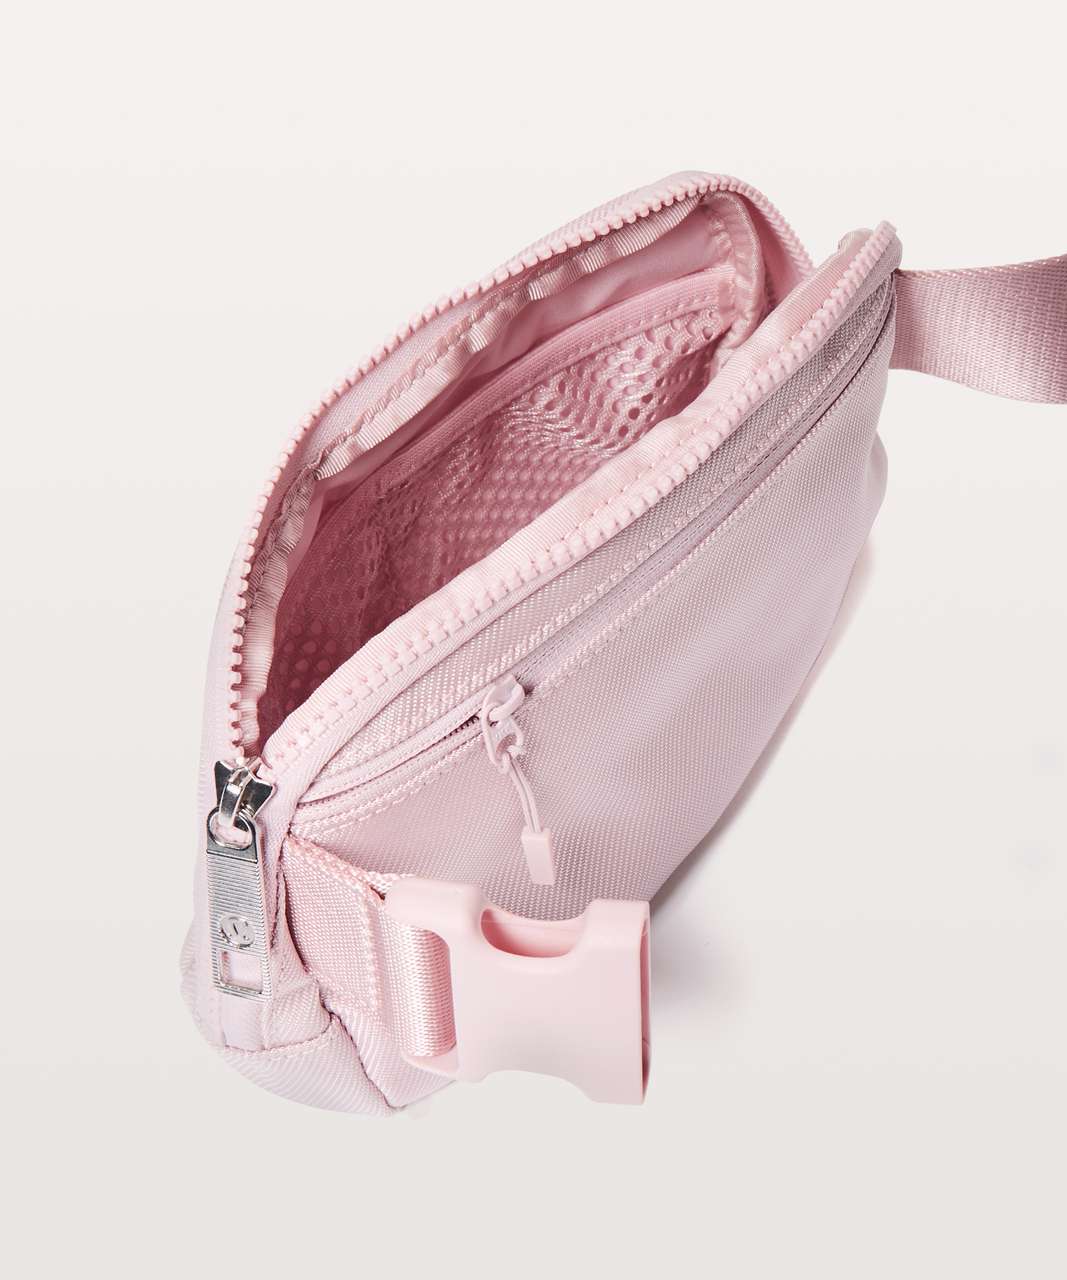 lululemon everywhere belt bag pink - Women's handbags